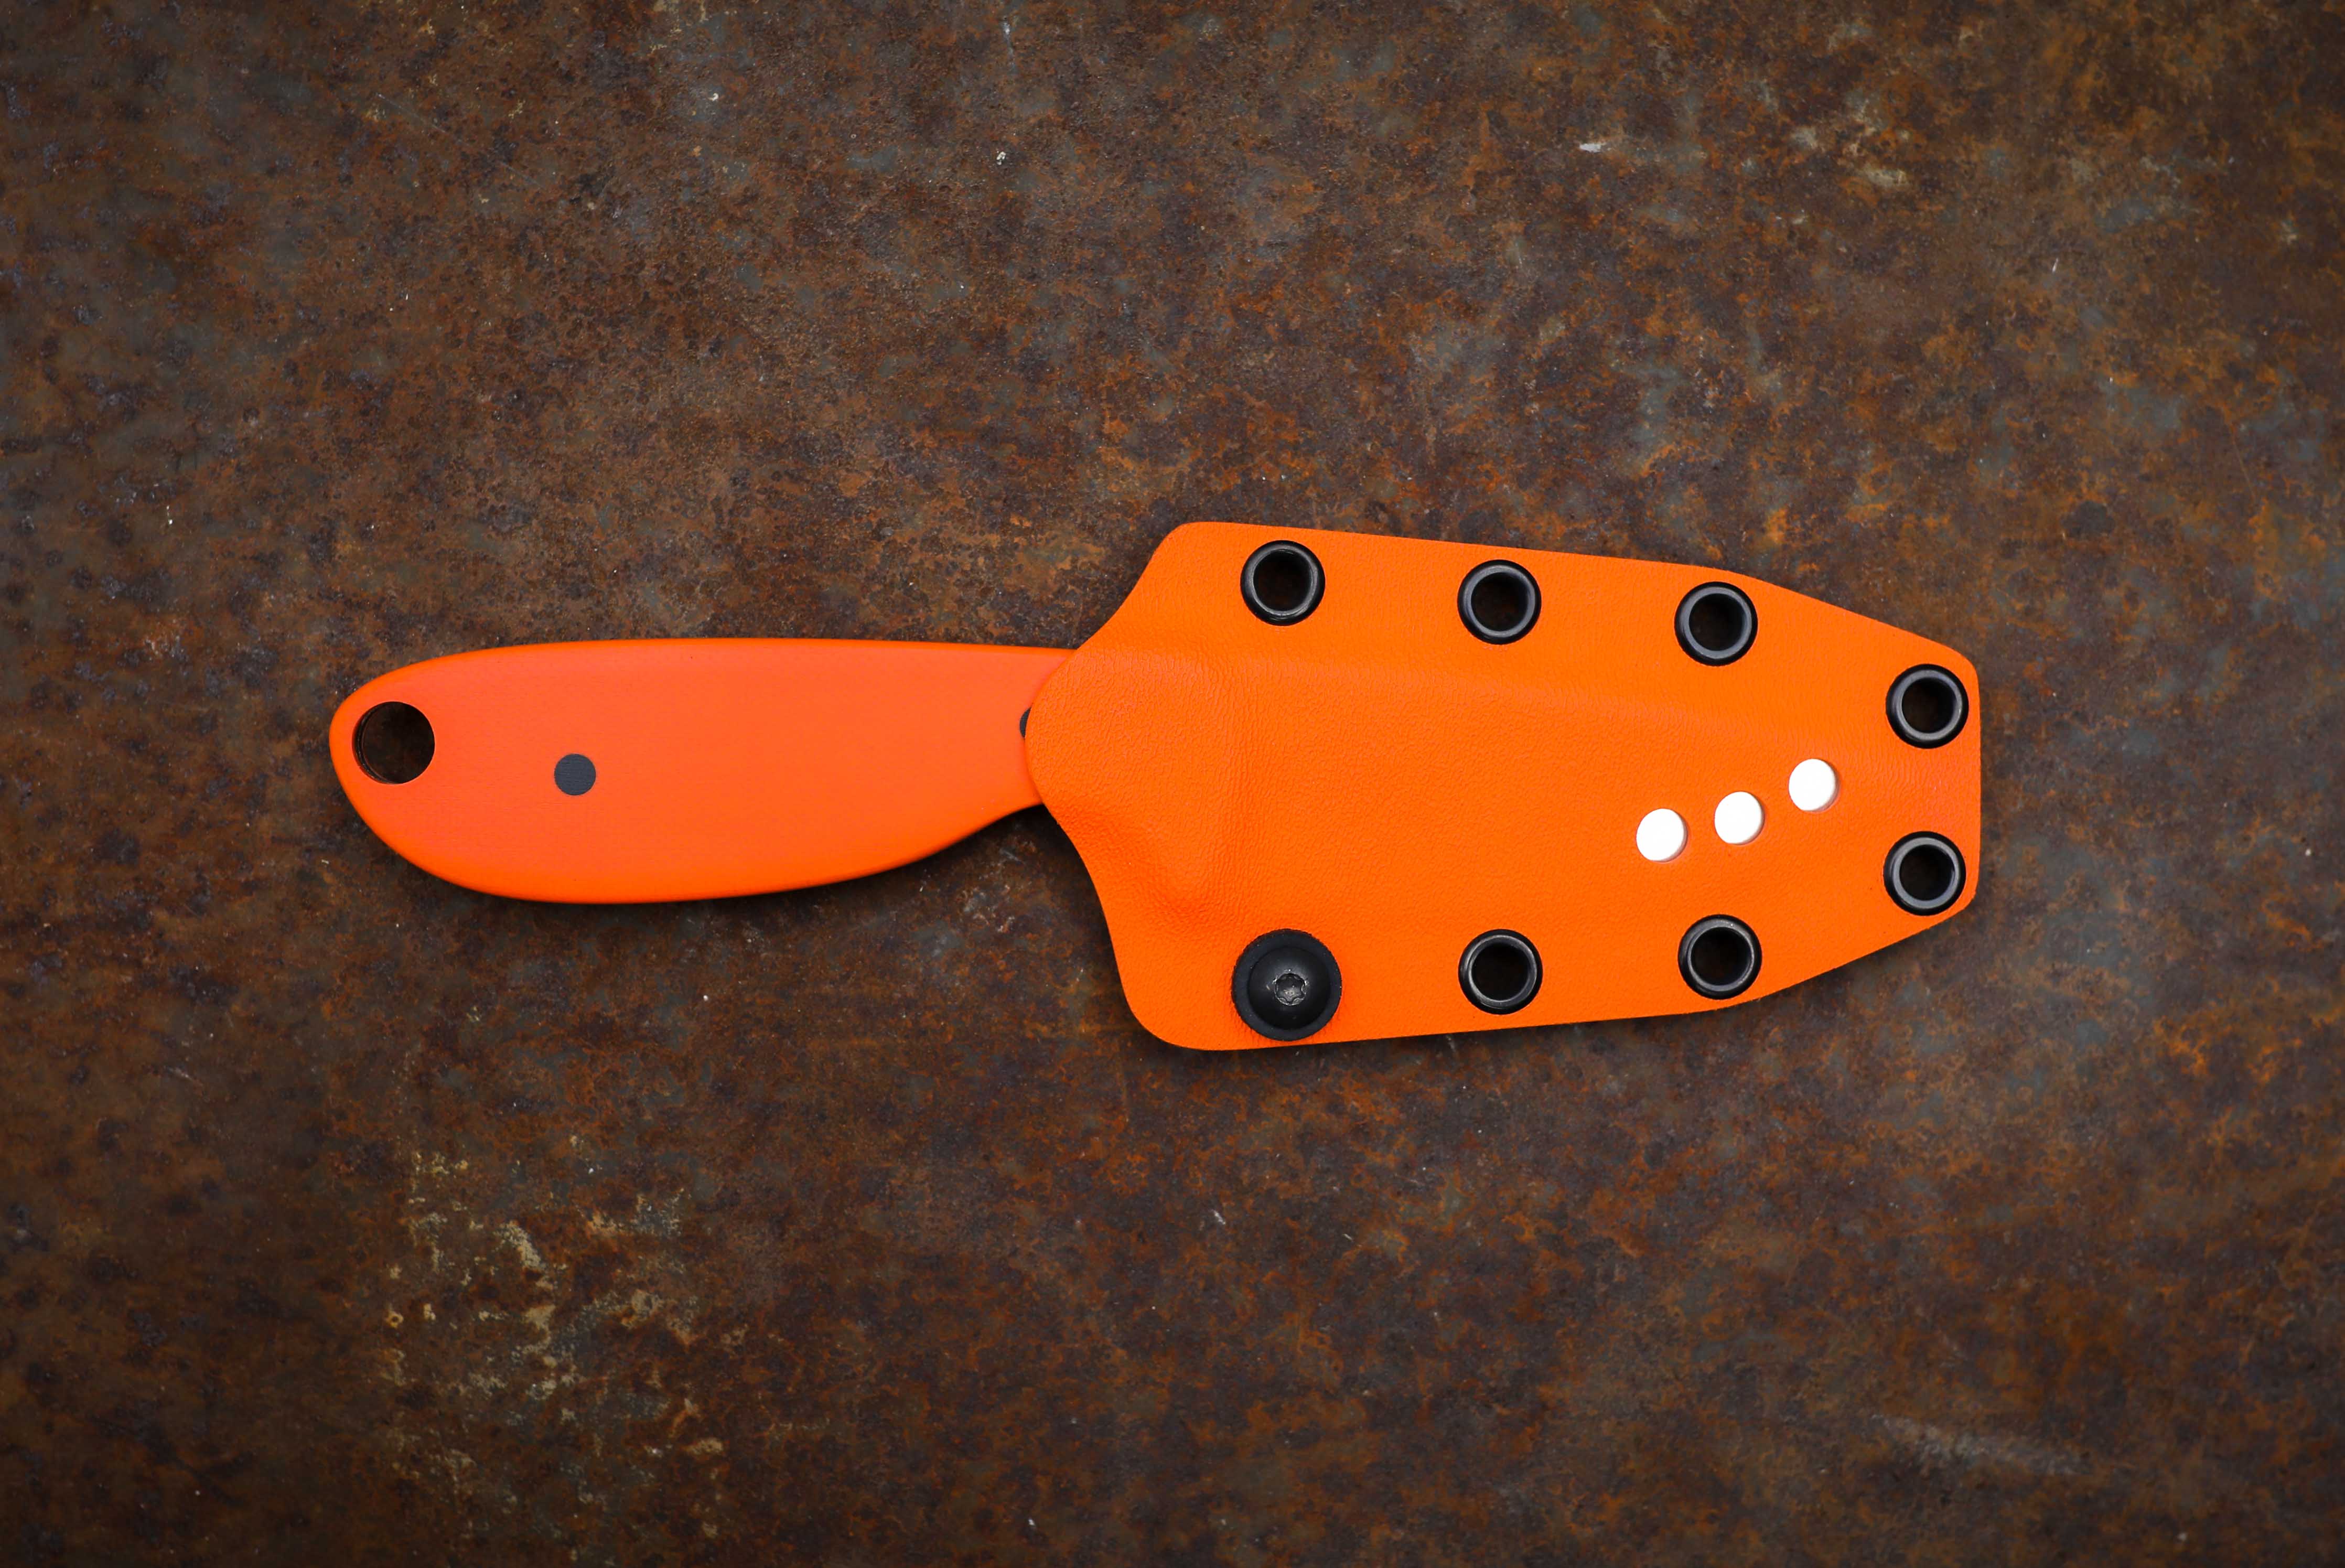 River Knife / Safety Orange with Orange Kydex Sheath